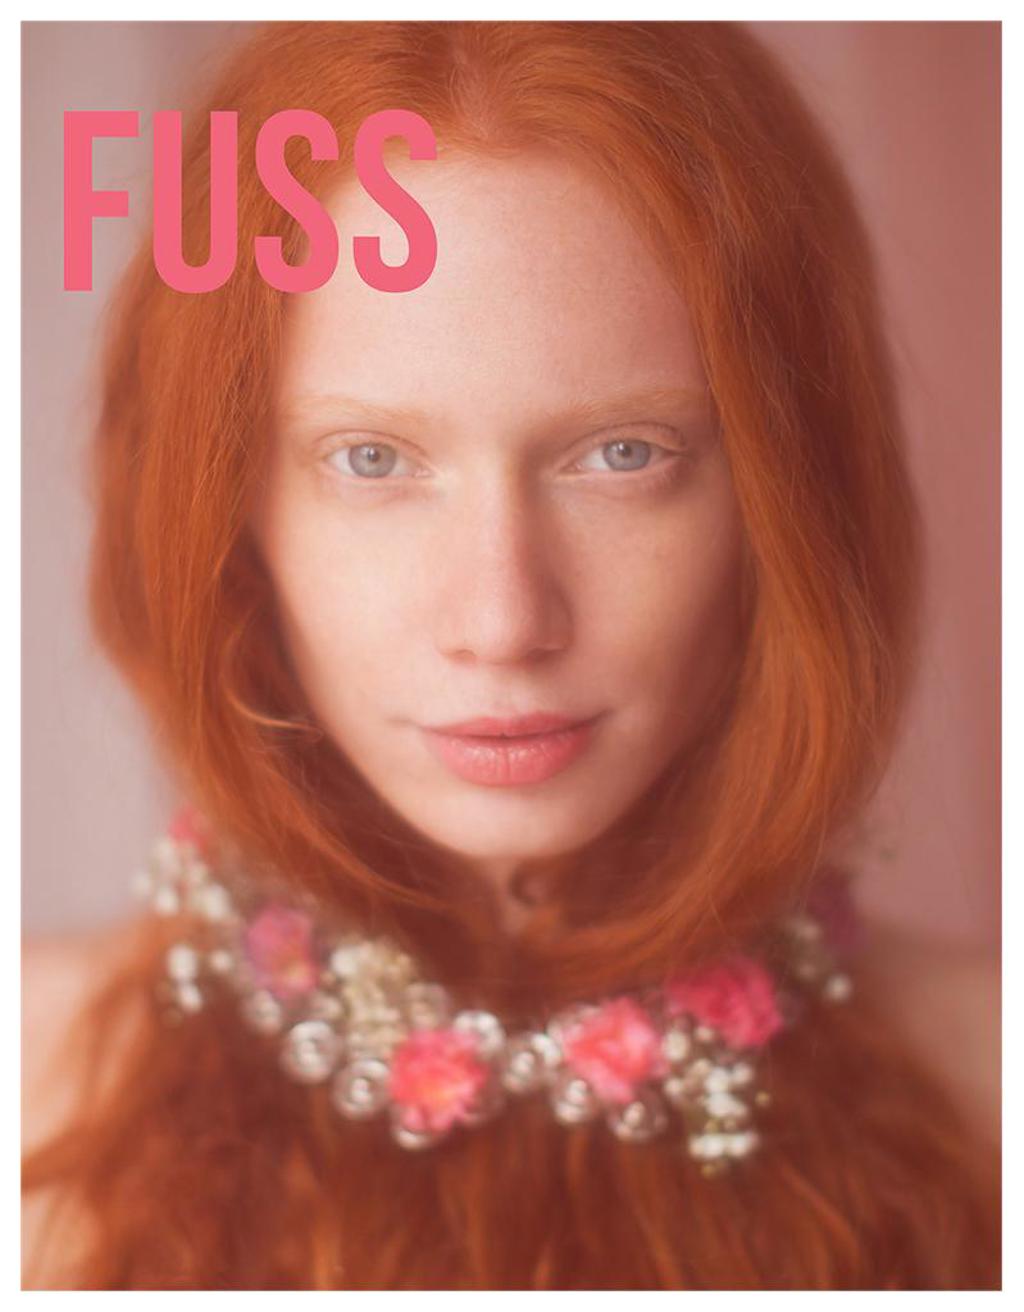 Editorials - Selected works.FUSS Magazine#4 - April 2014 - Pink Wonderland